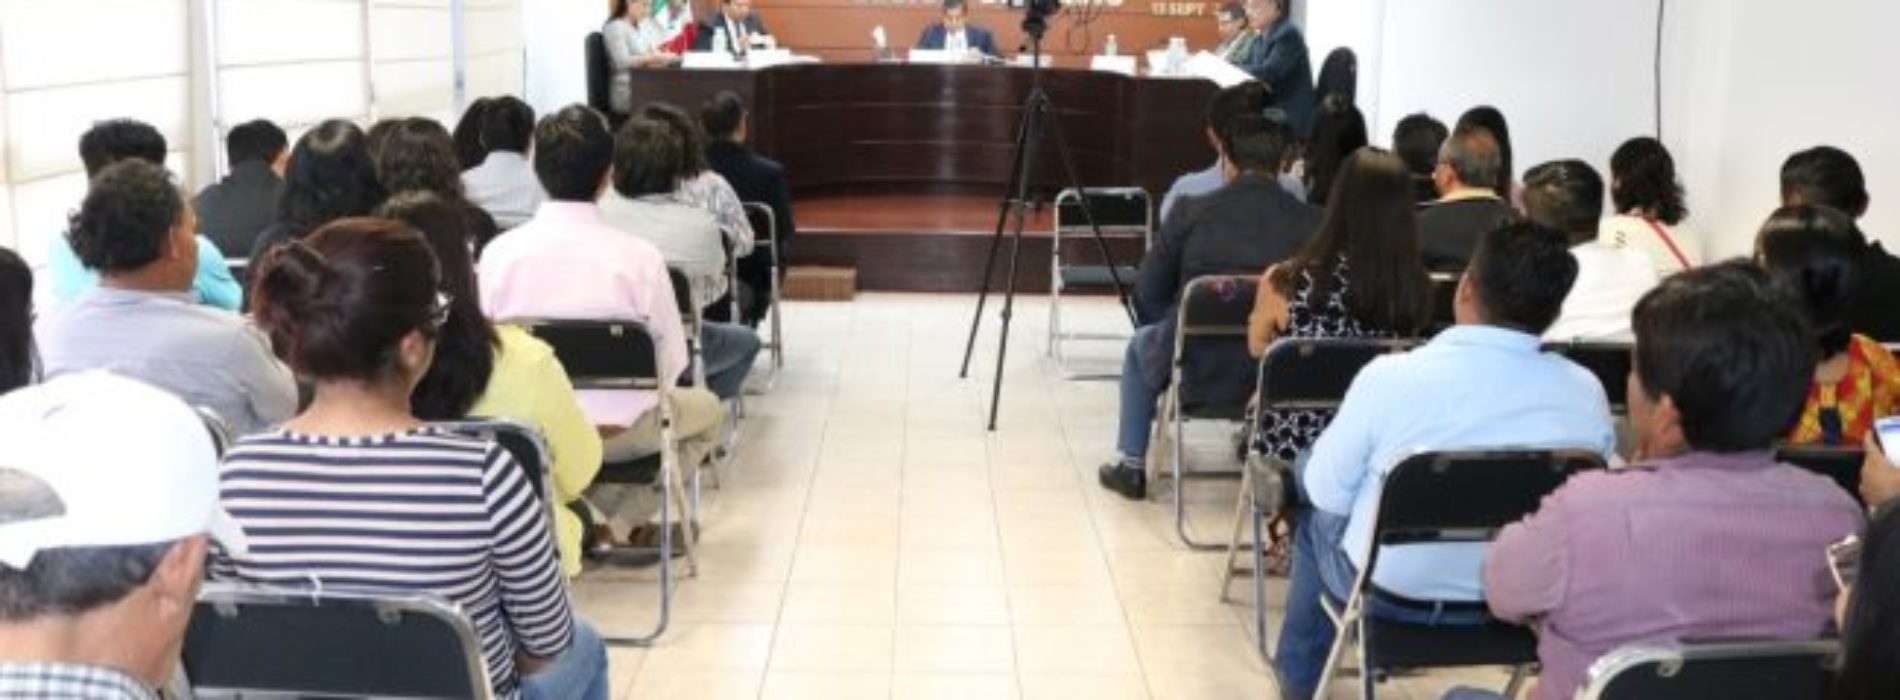 Confirman elección de autoridades en Santa María Xadani y
seis municipios más de Oaxaca